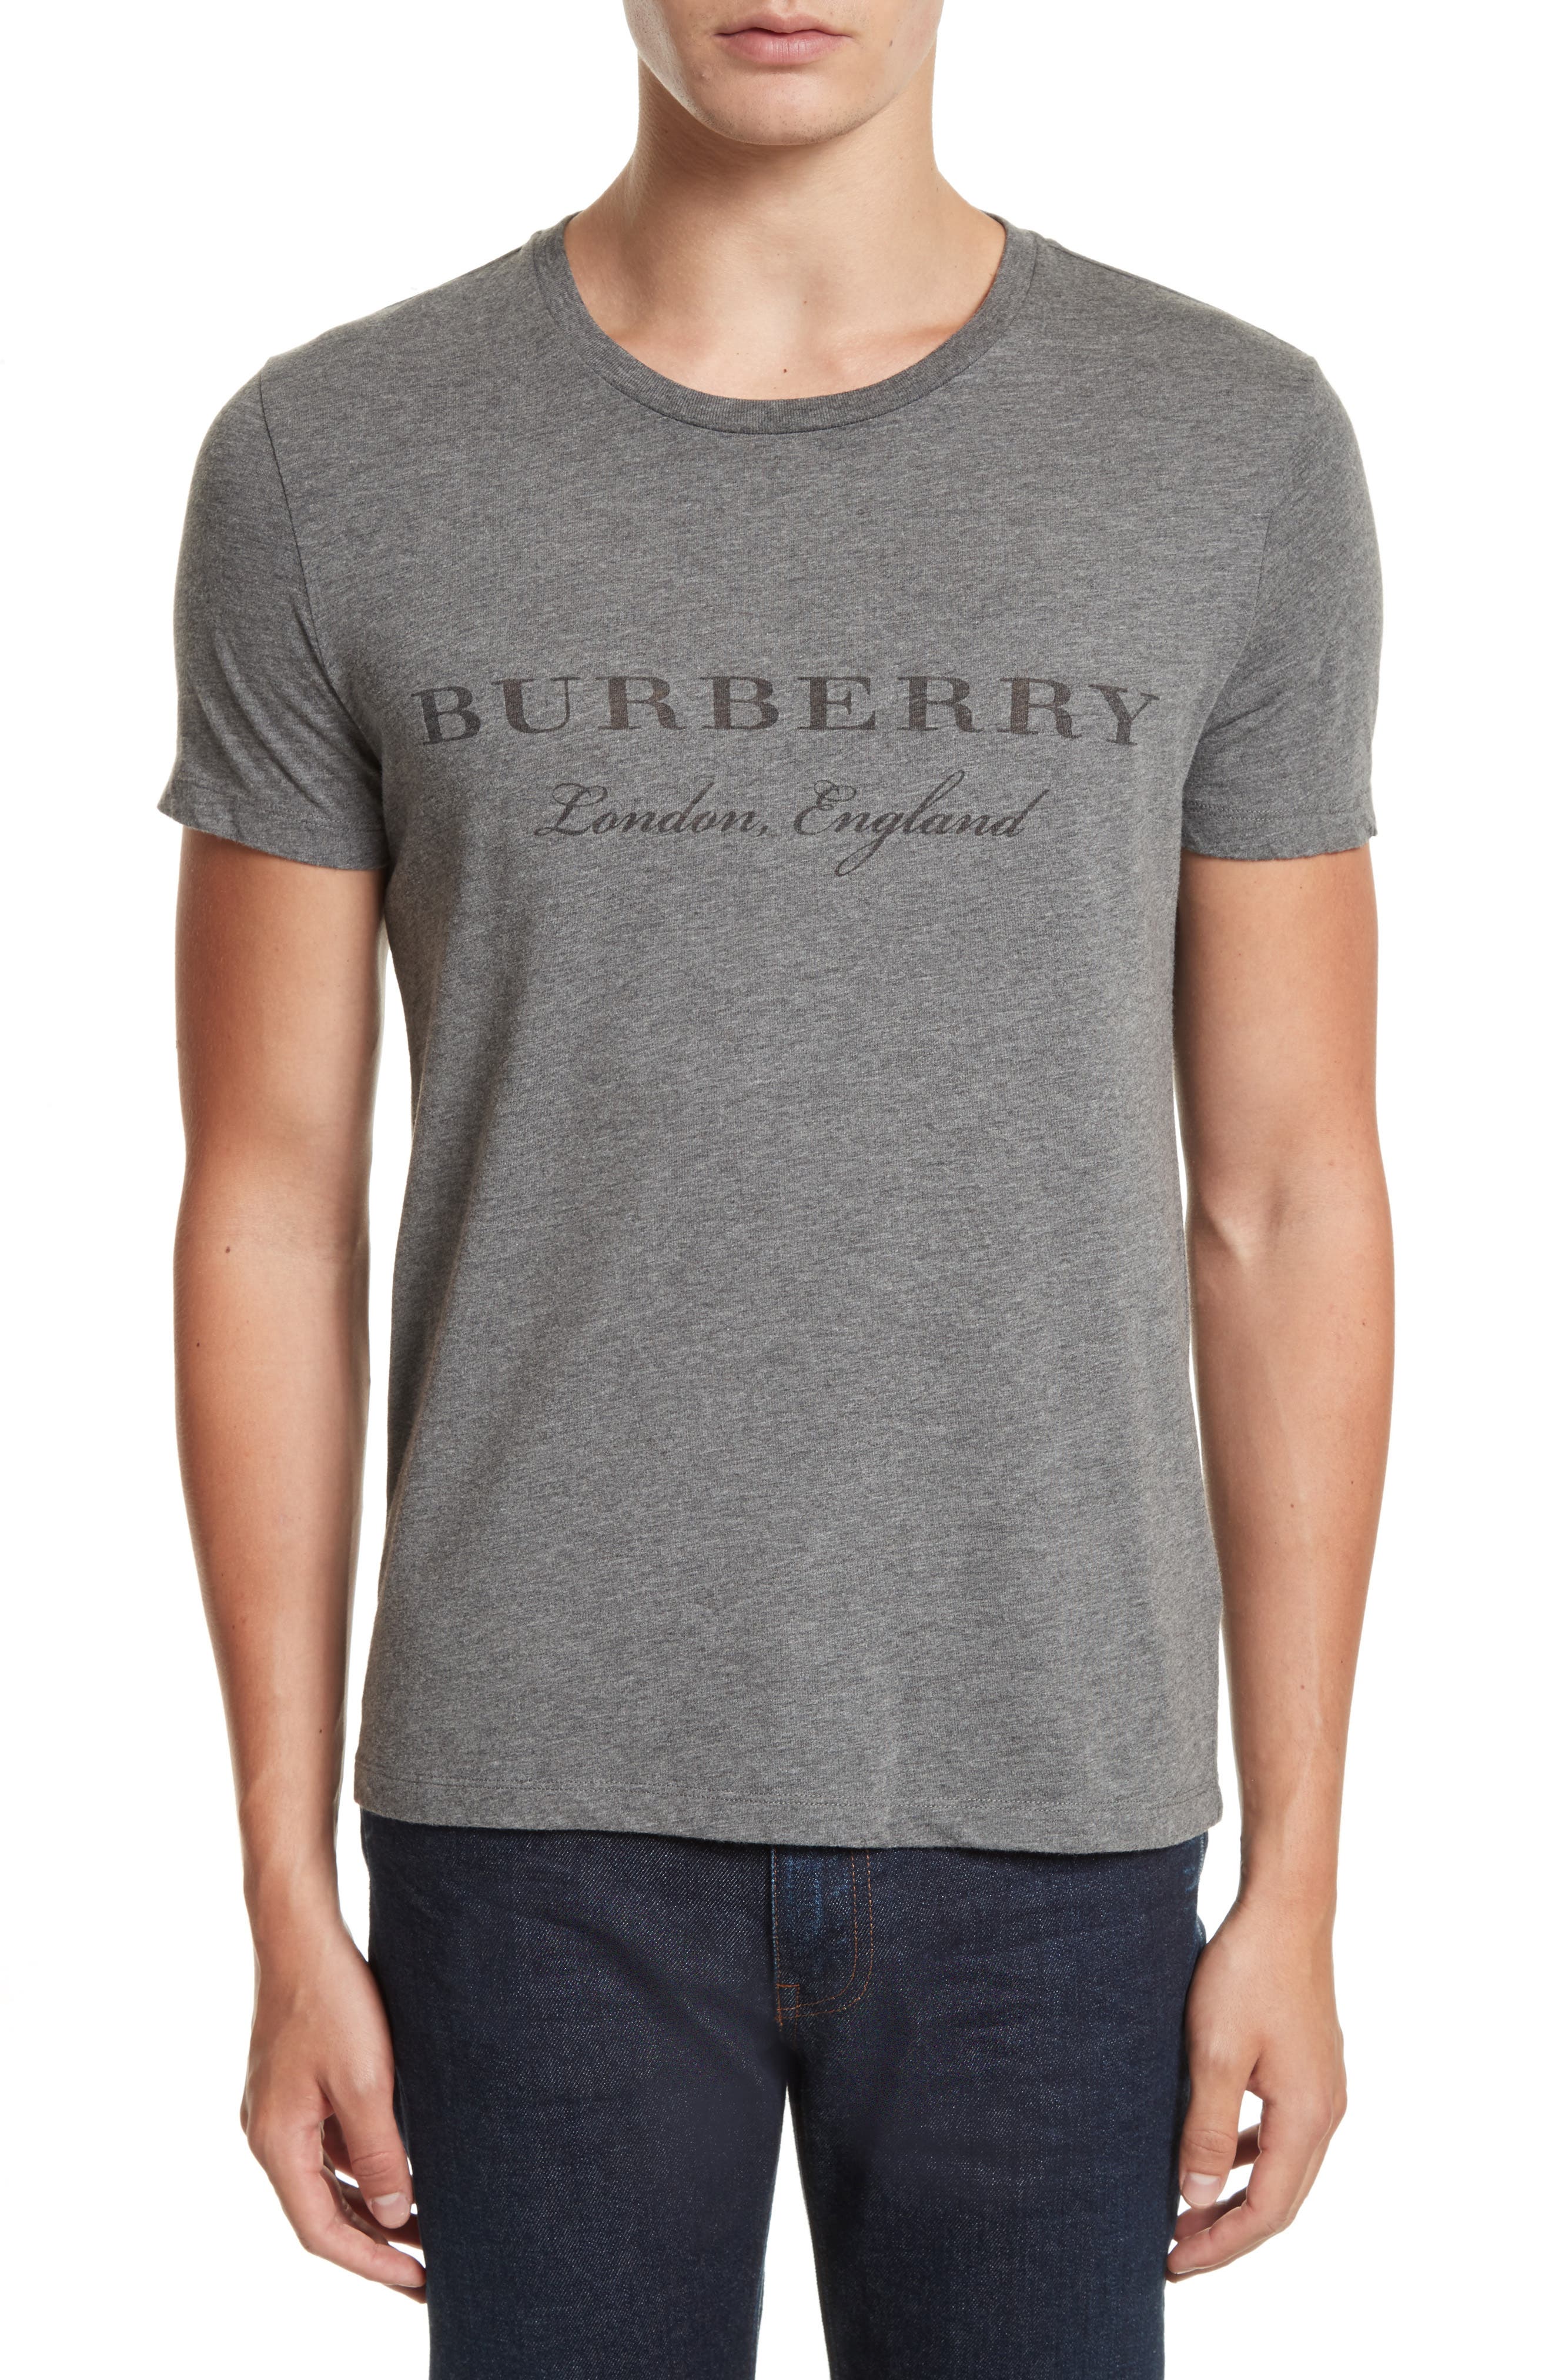 burberry t shirt nordstrom